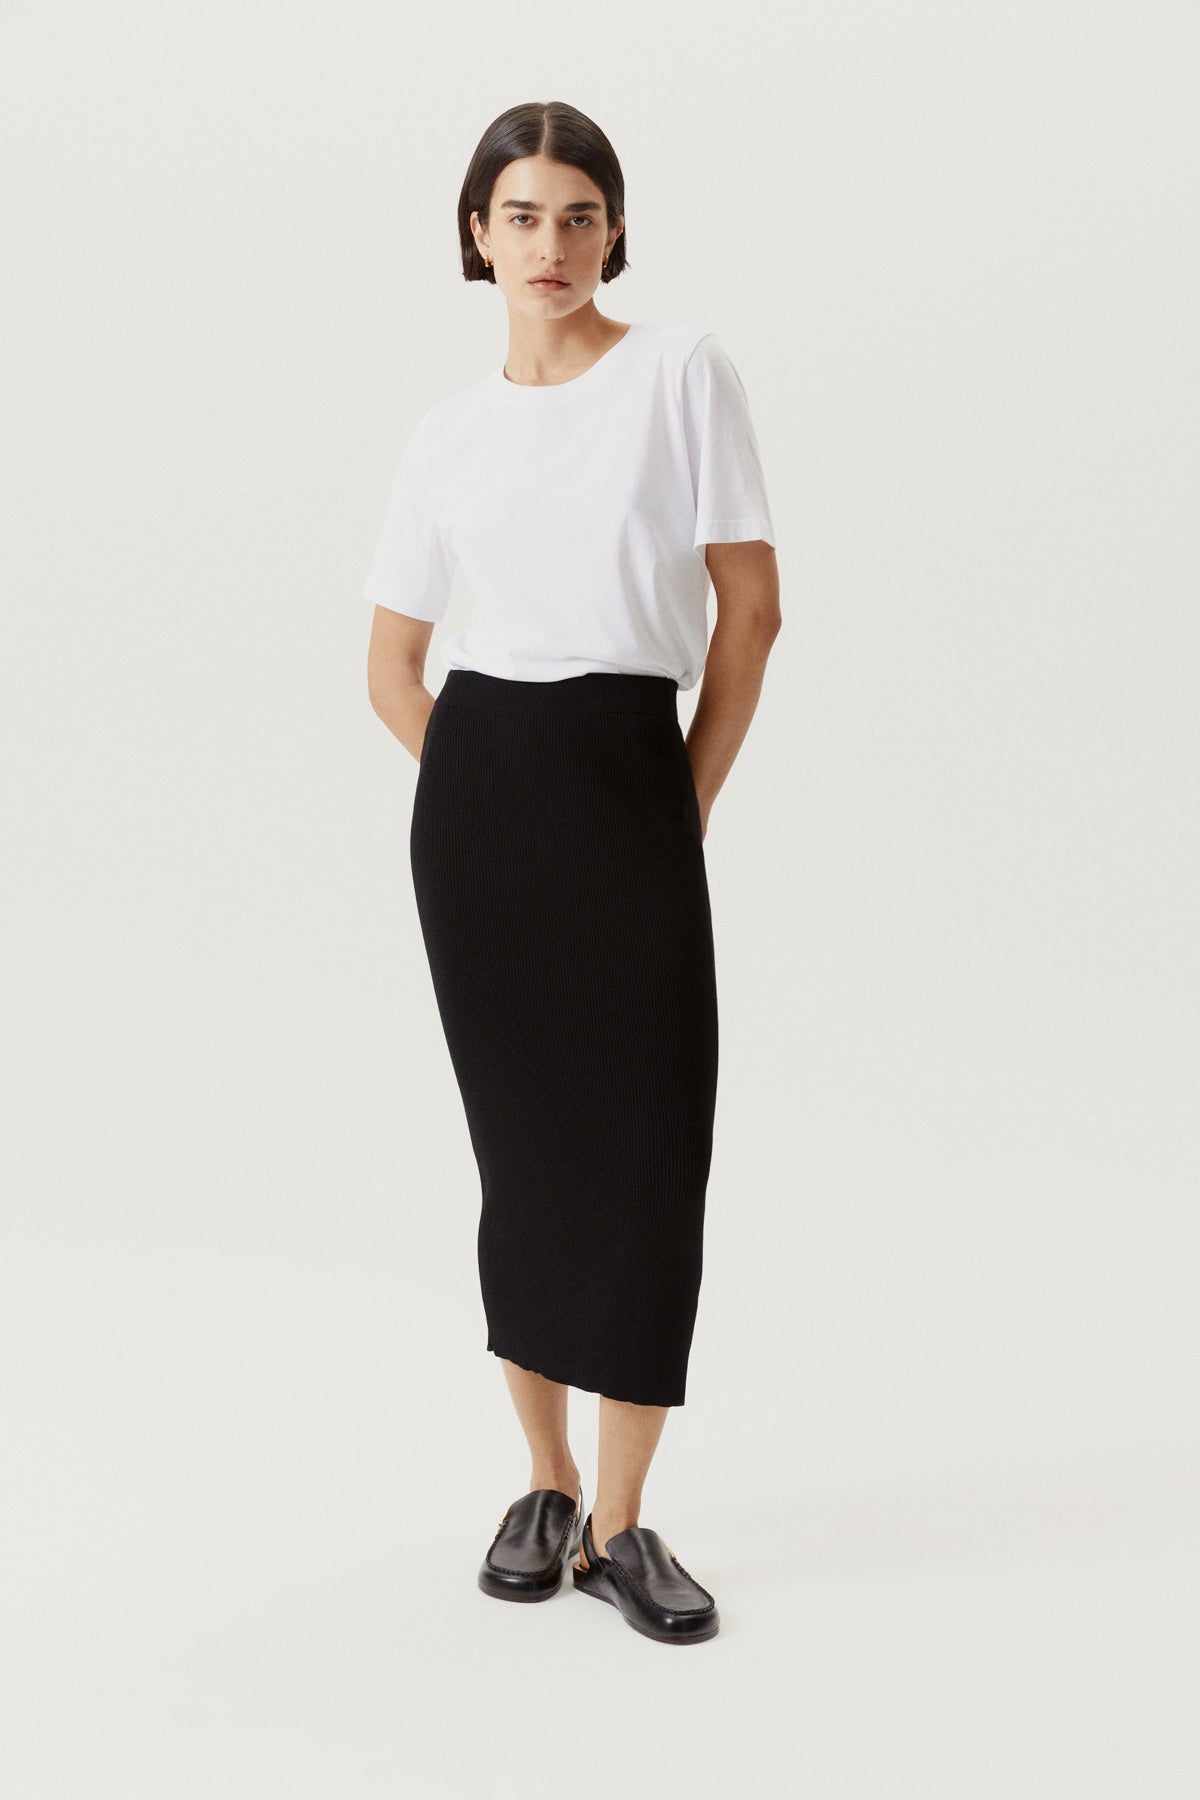 Black | The Organic Cotton Ribbed Skirt